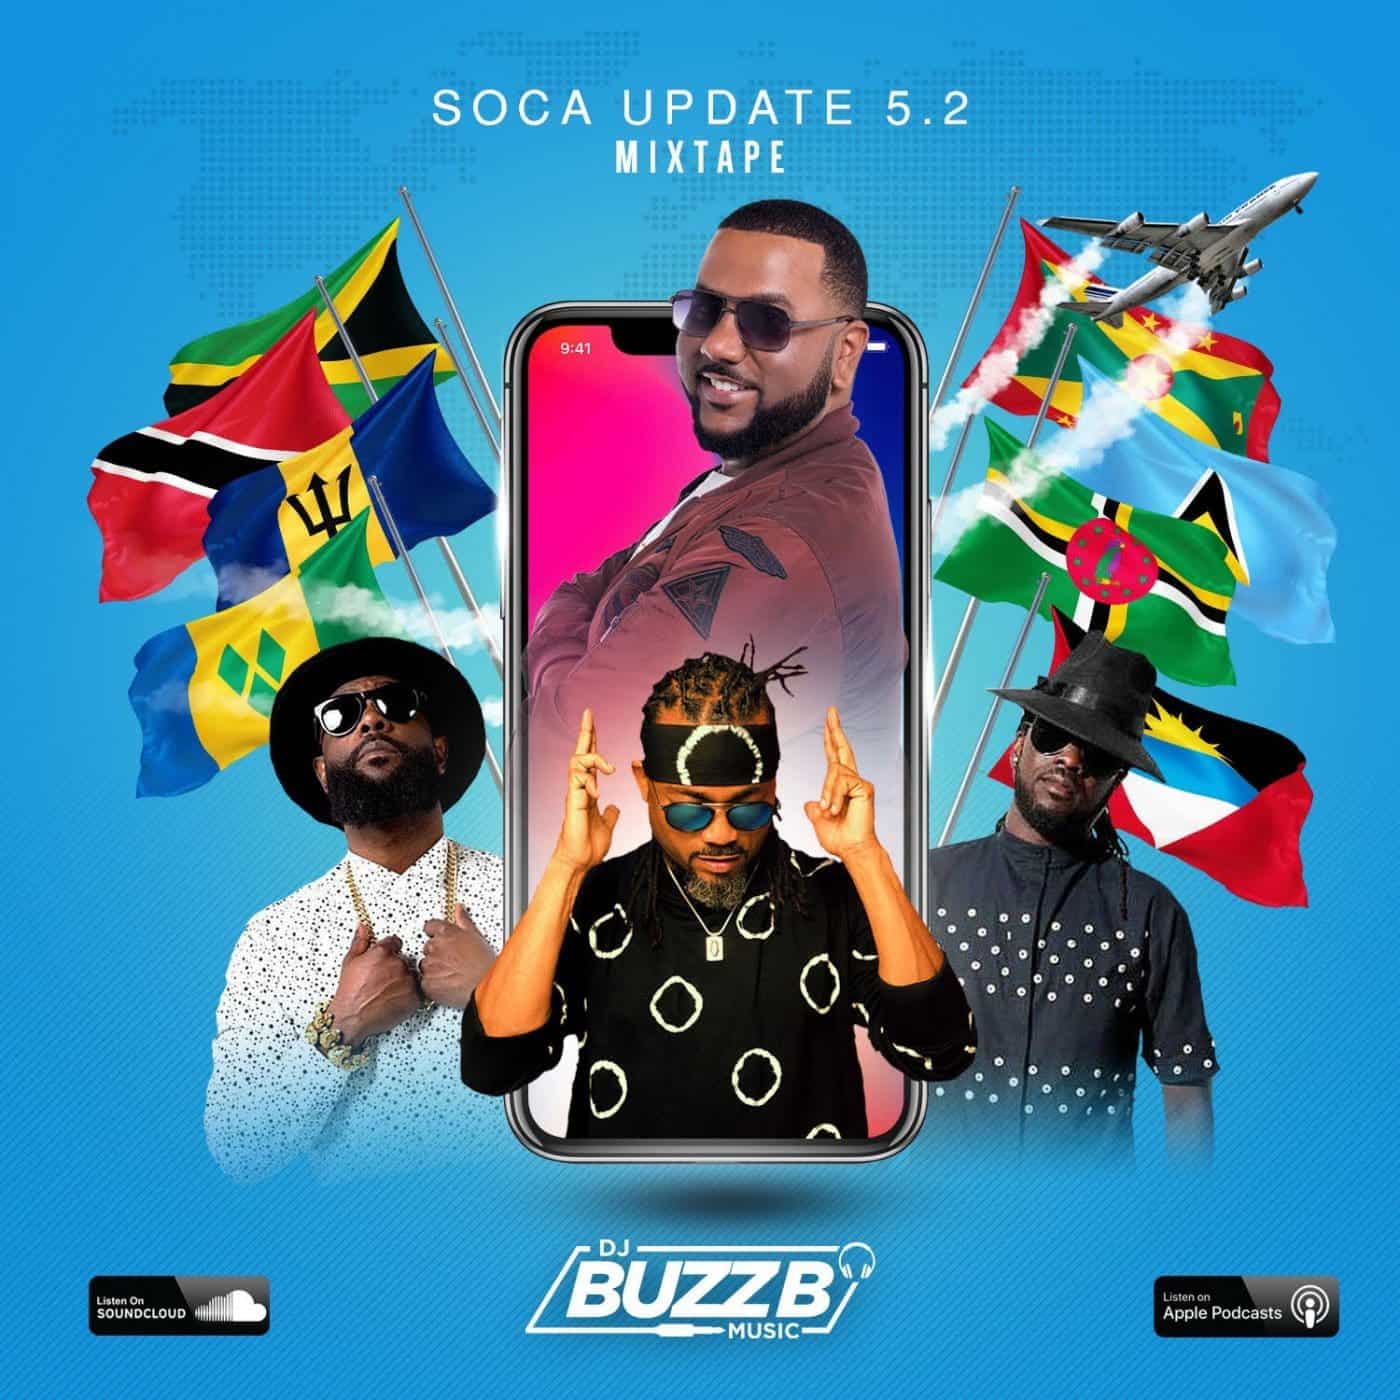 Soca Update 5.2 by DJ BuzzB